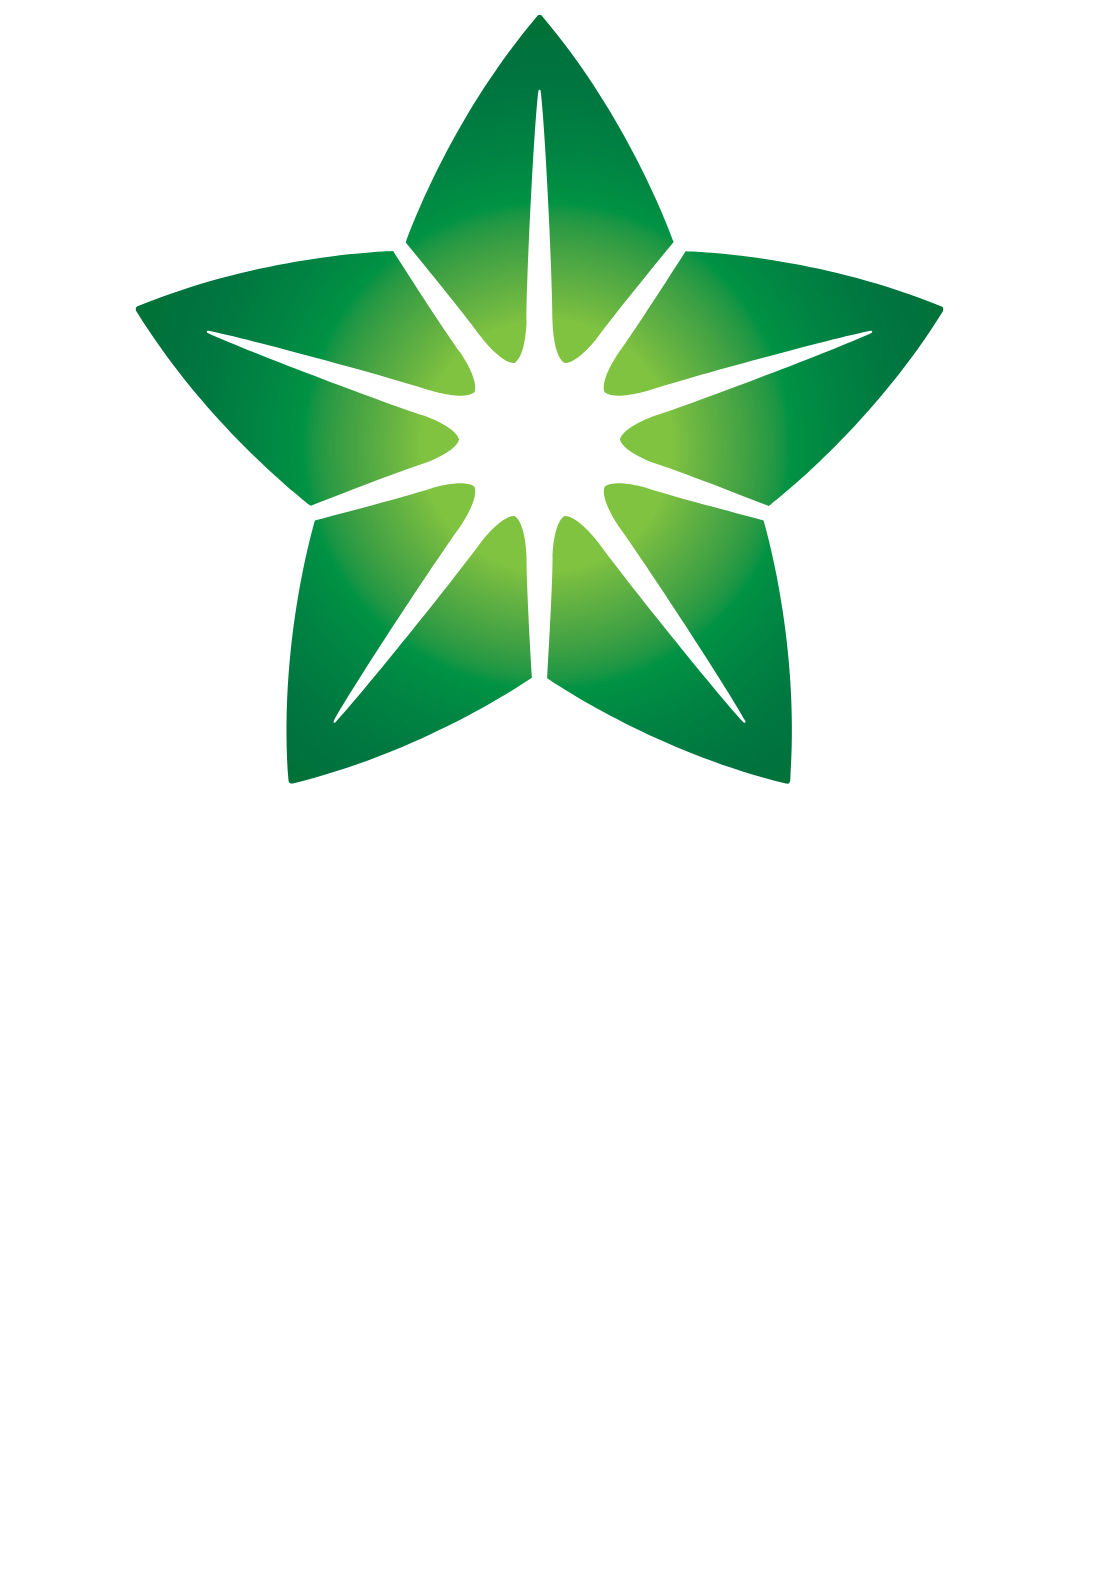 Qatar Fuel Company (WOQOD) logo grand pour les fonds sombres (PNG transparent)